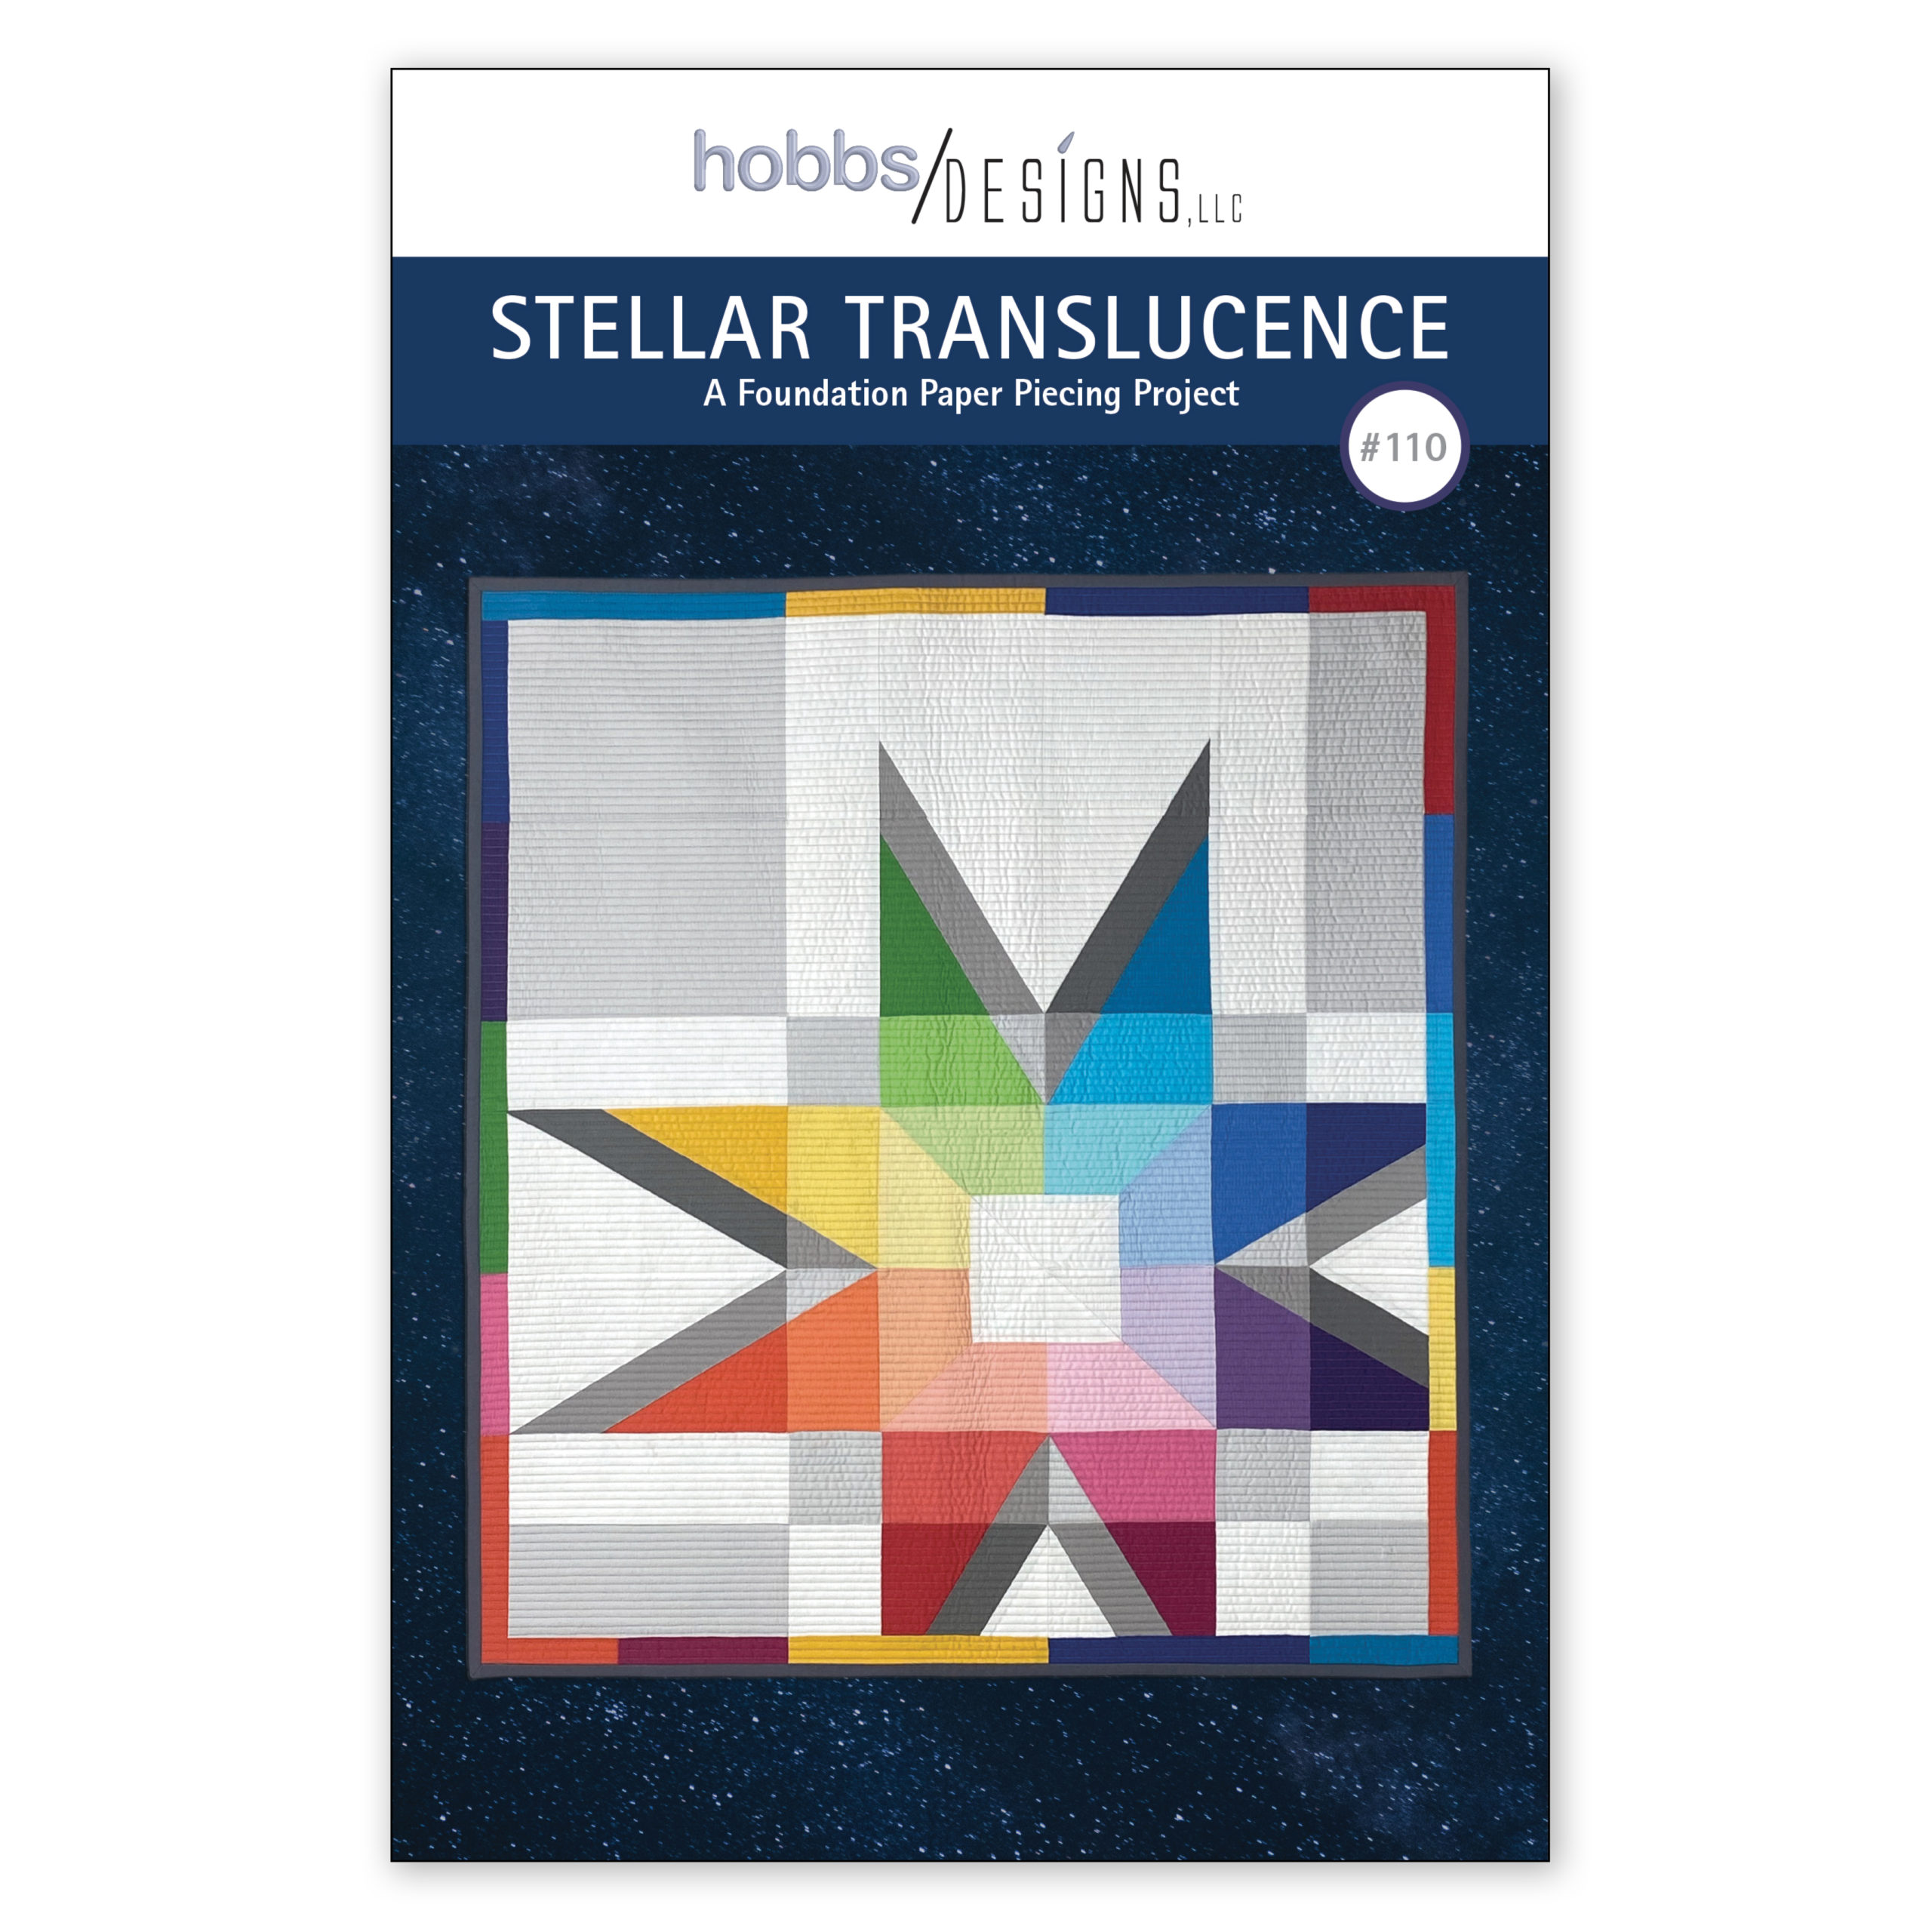 Stellar Translucence quilt pattern cover